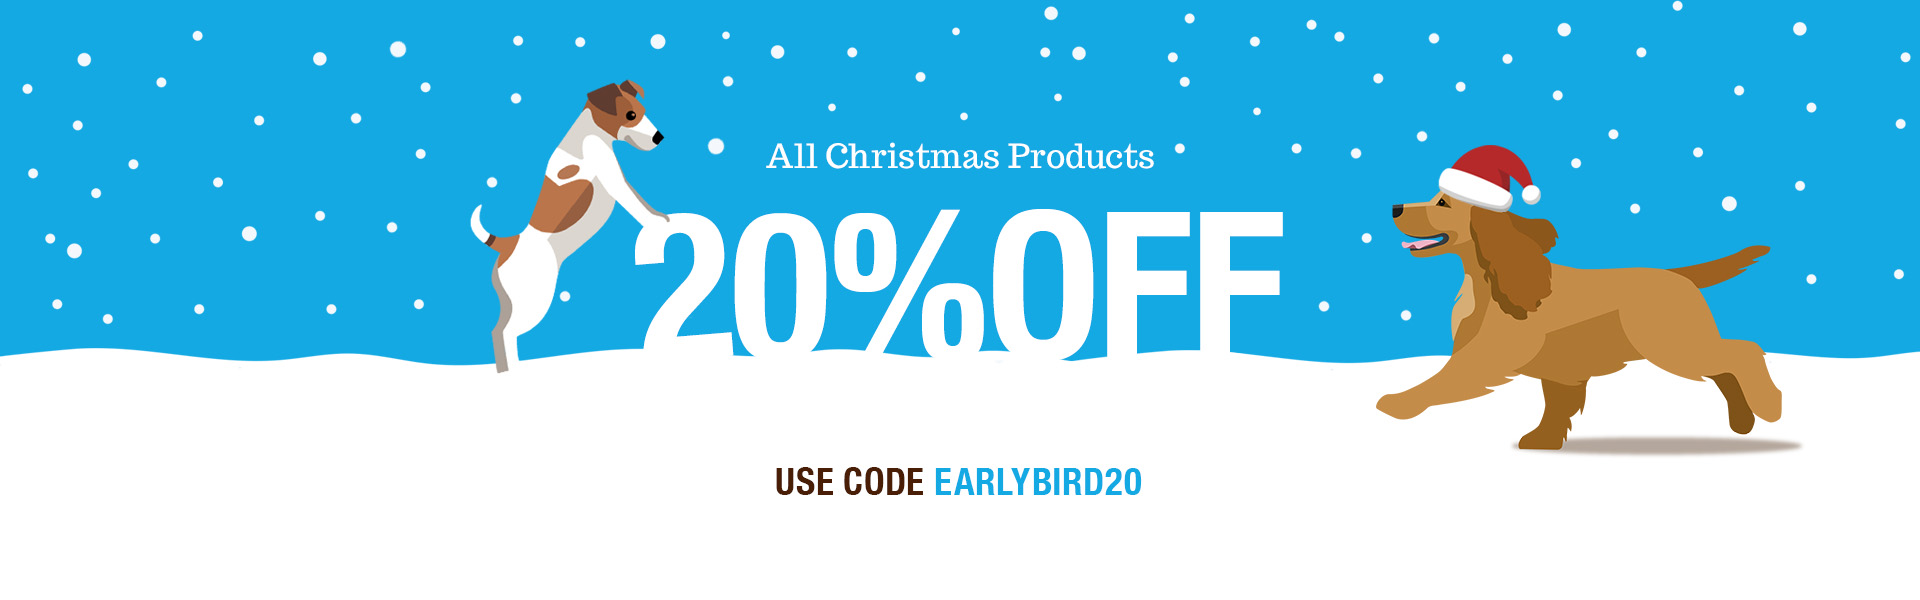 Early bird Christmas offer